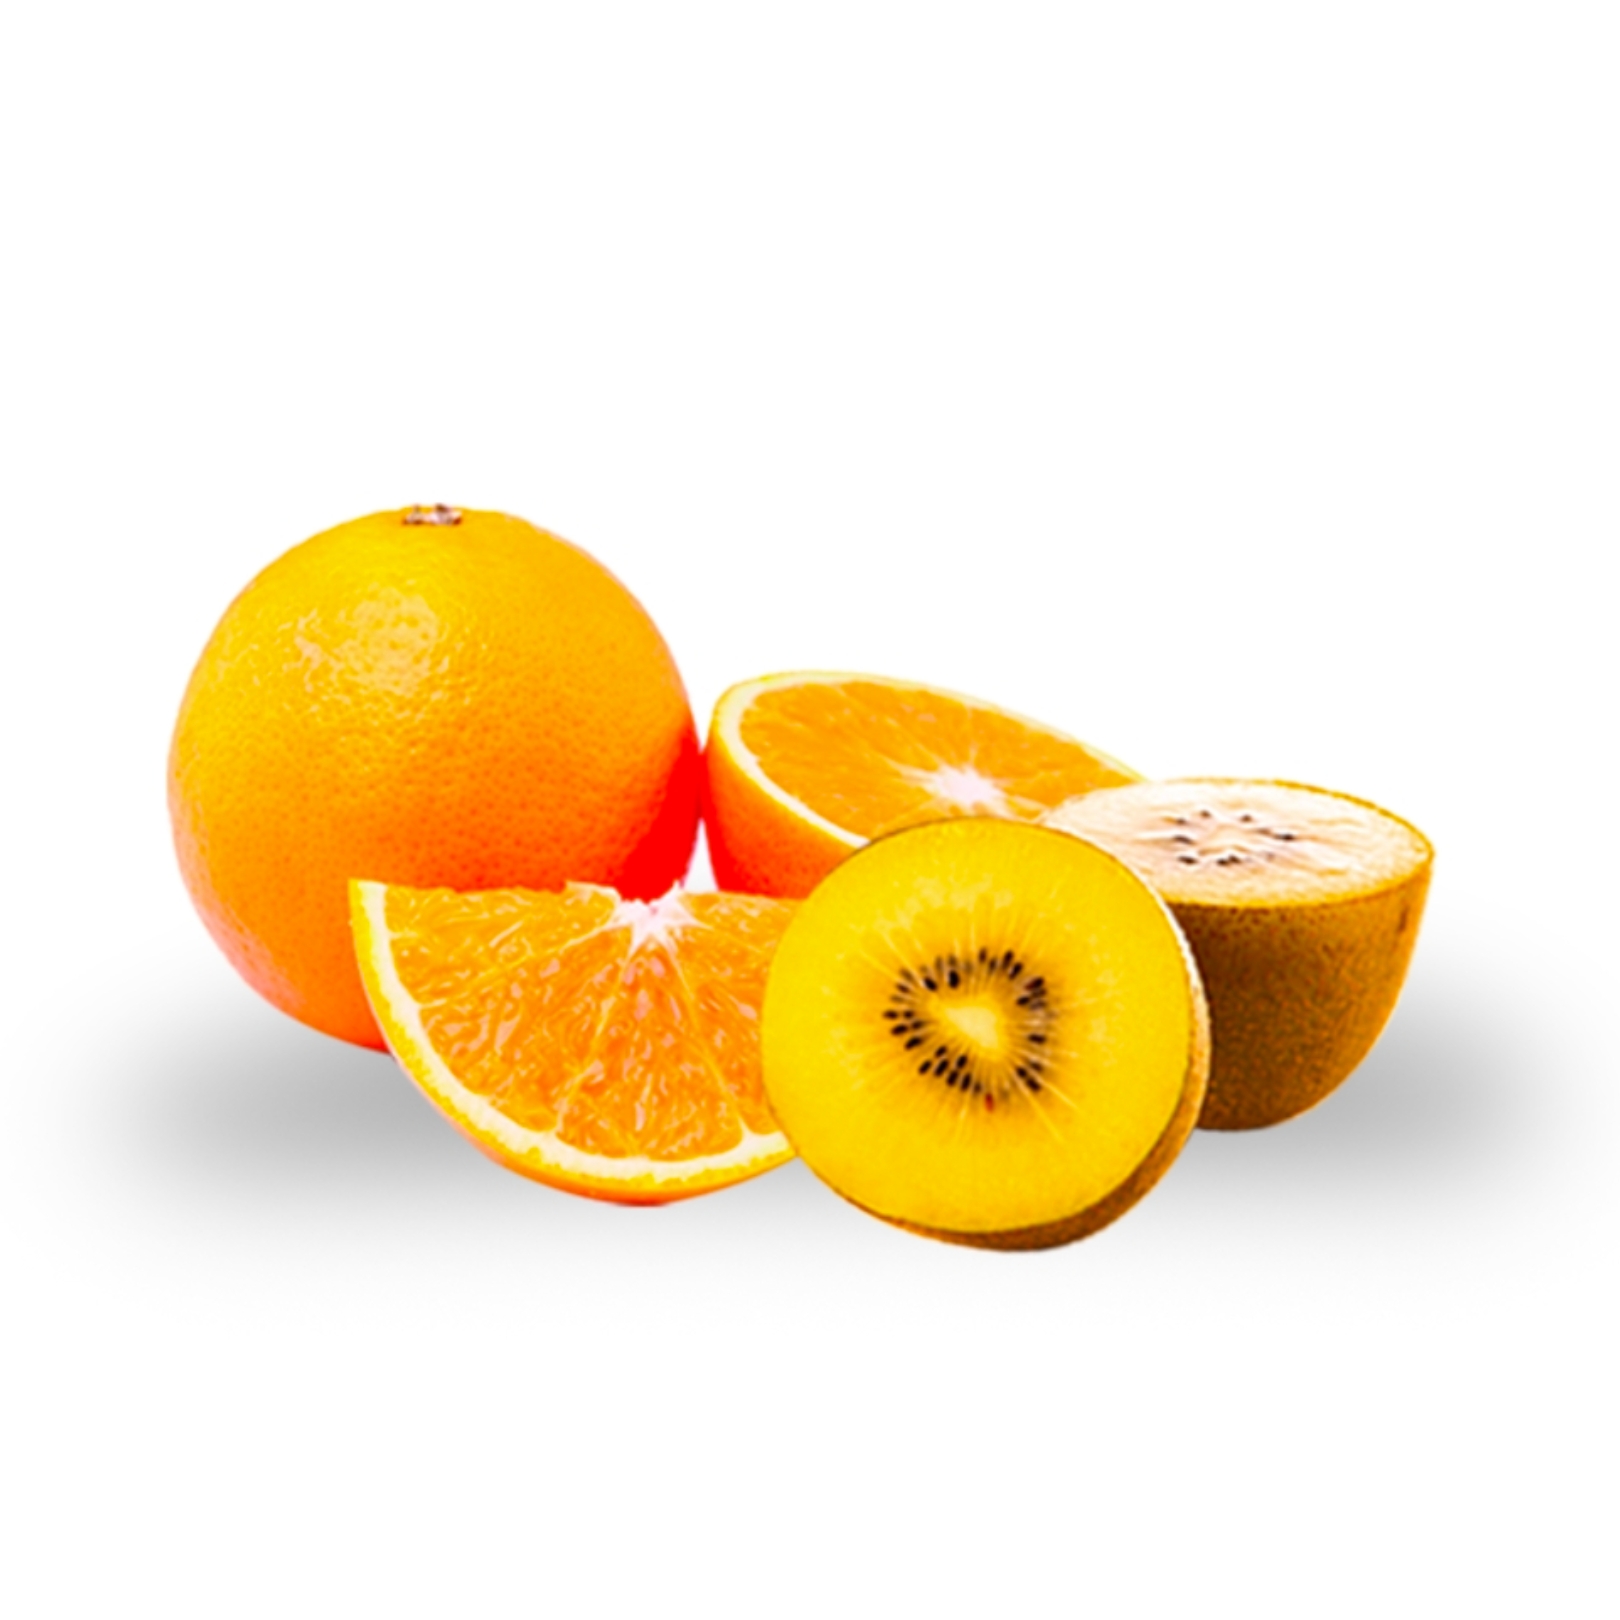 Buy Orange Kiwifruit Online NZ